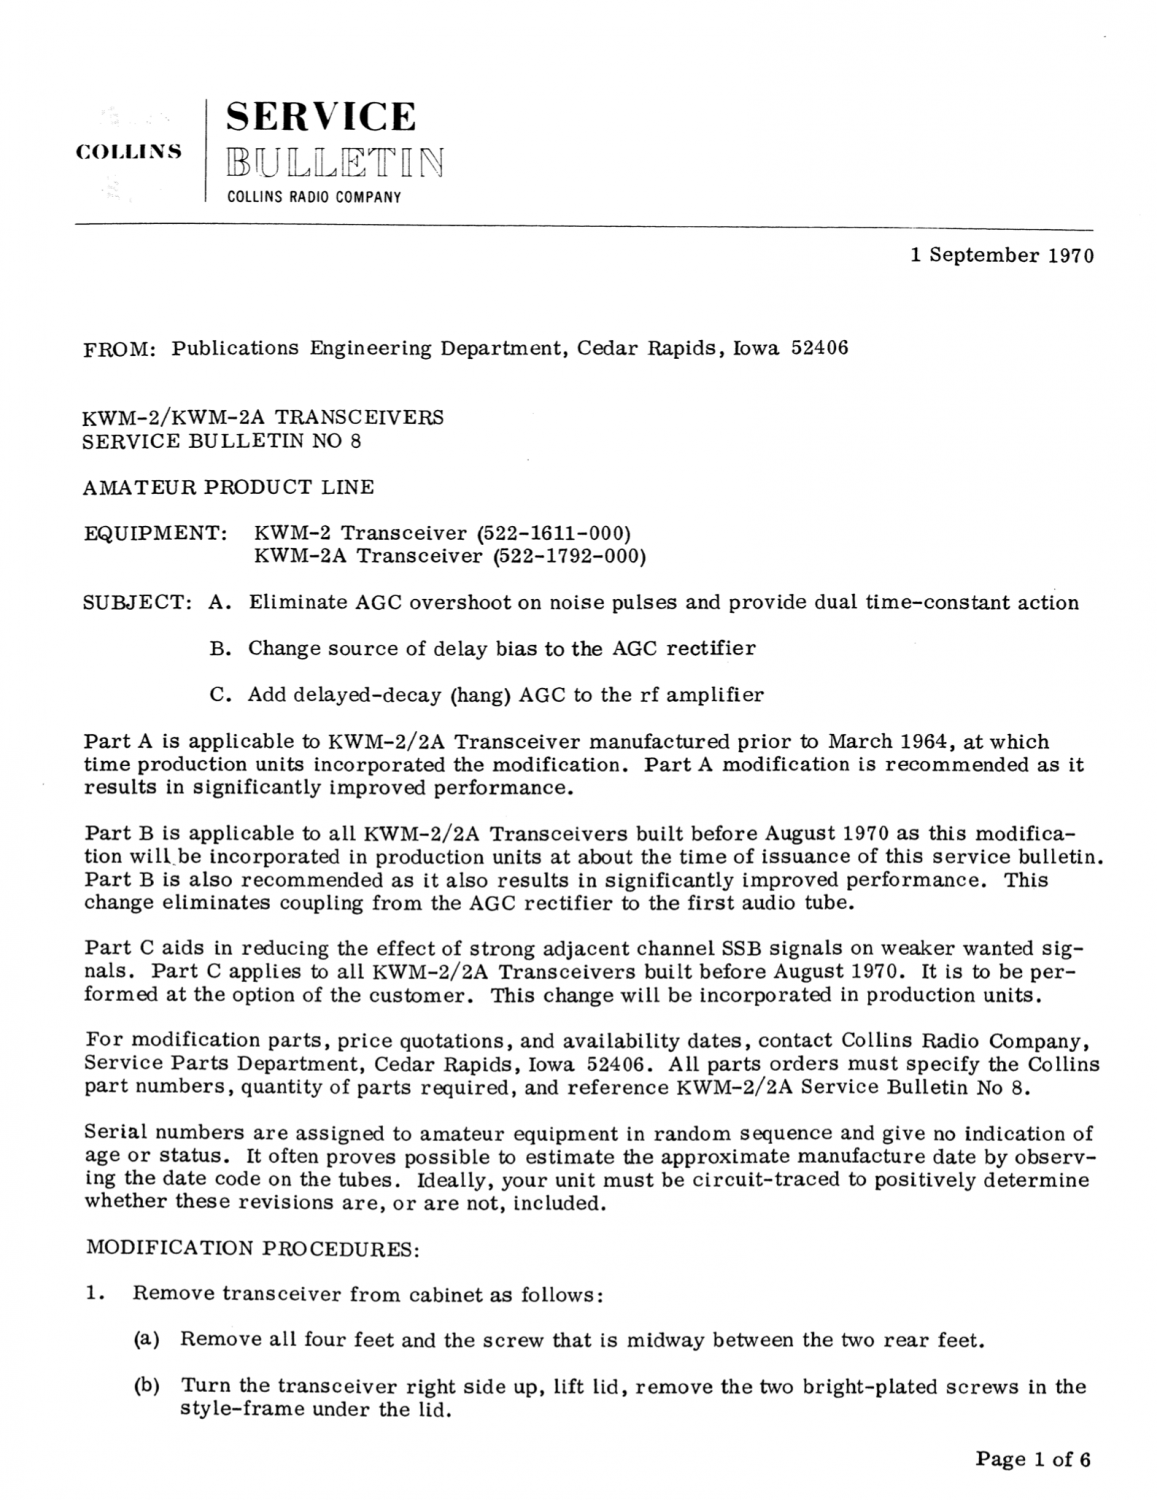 Collins KWM-2A Transceiver - Service Bulletin Number 8 - (1970-09)